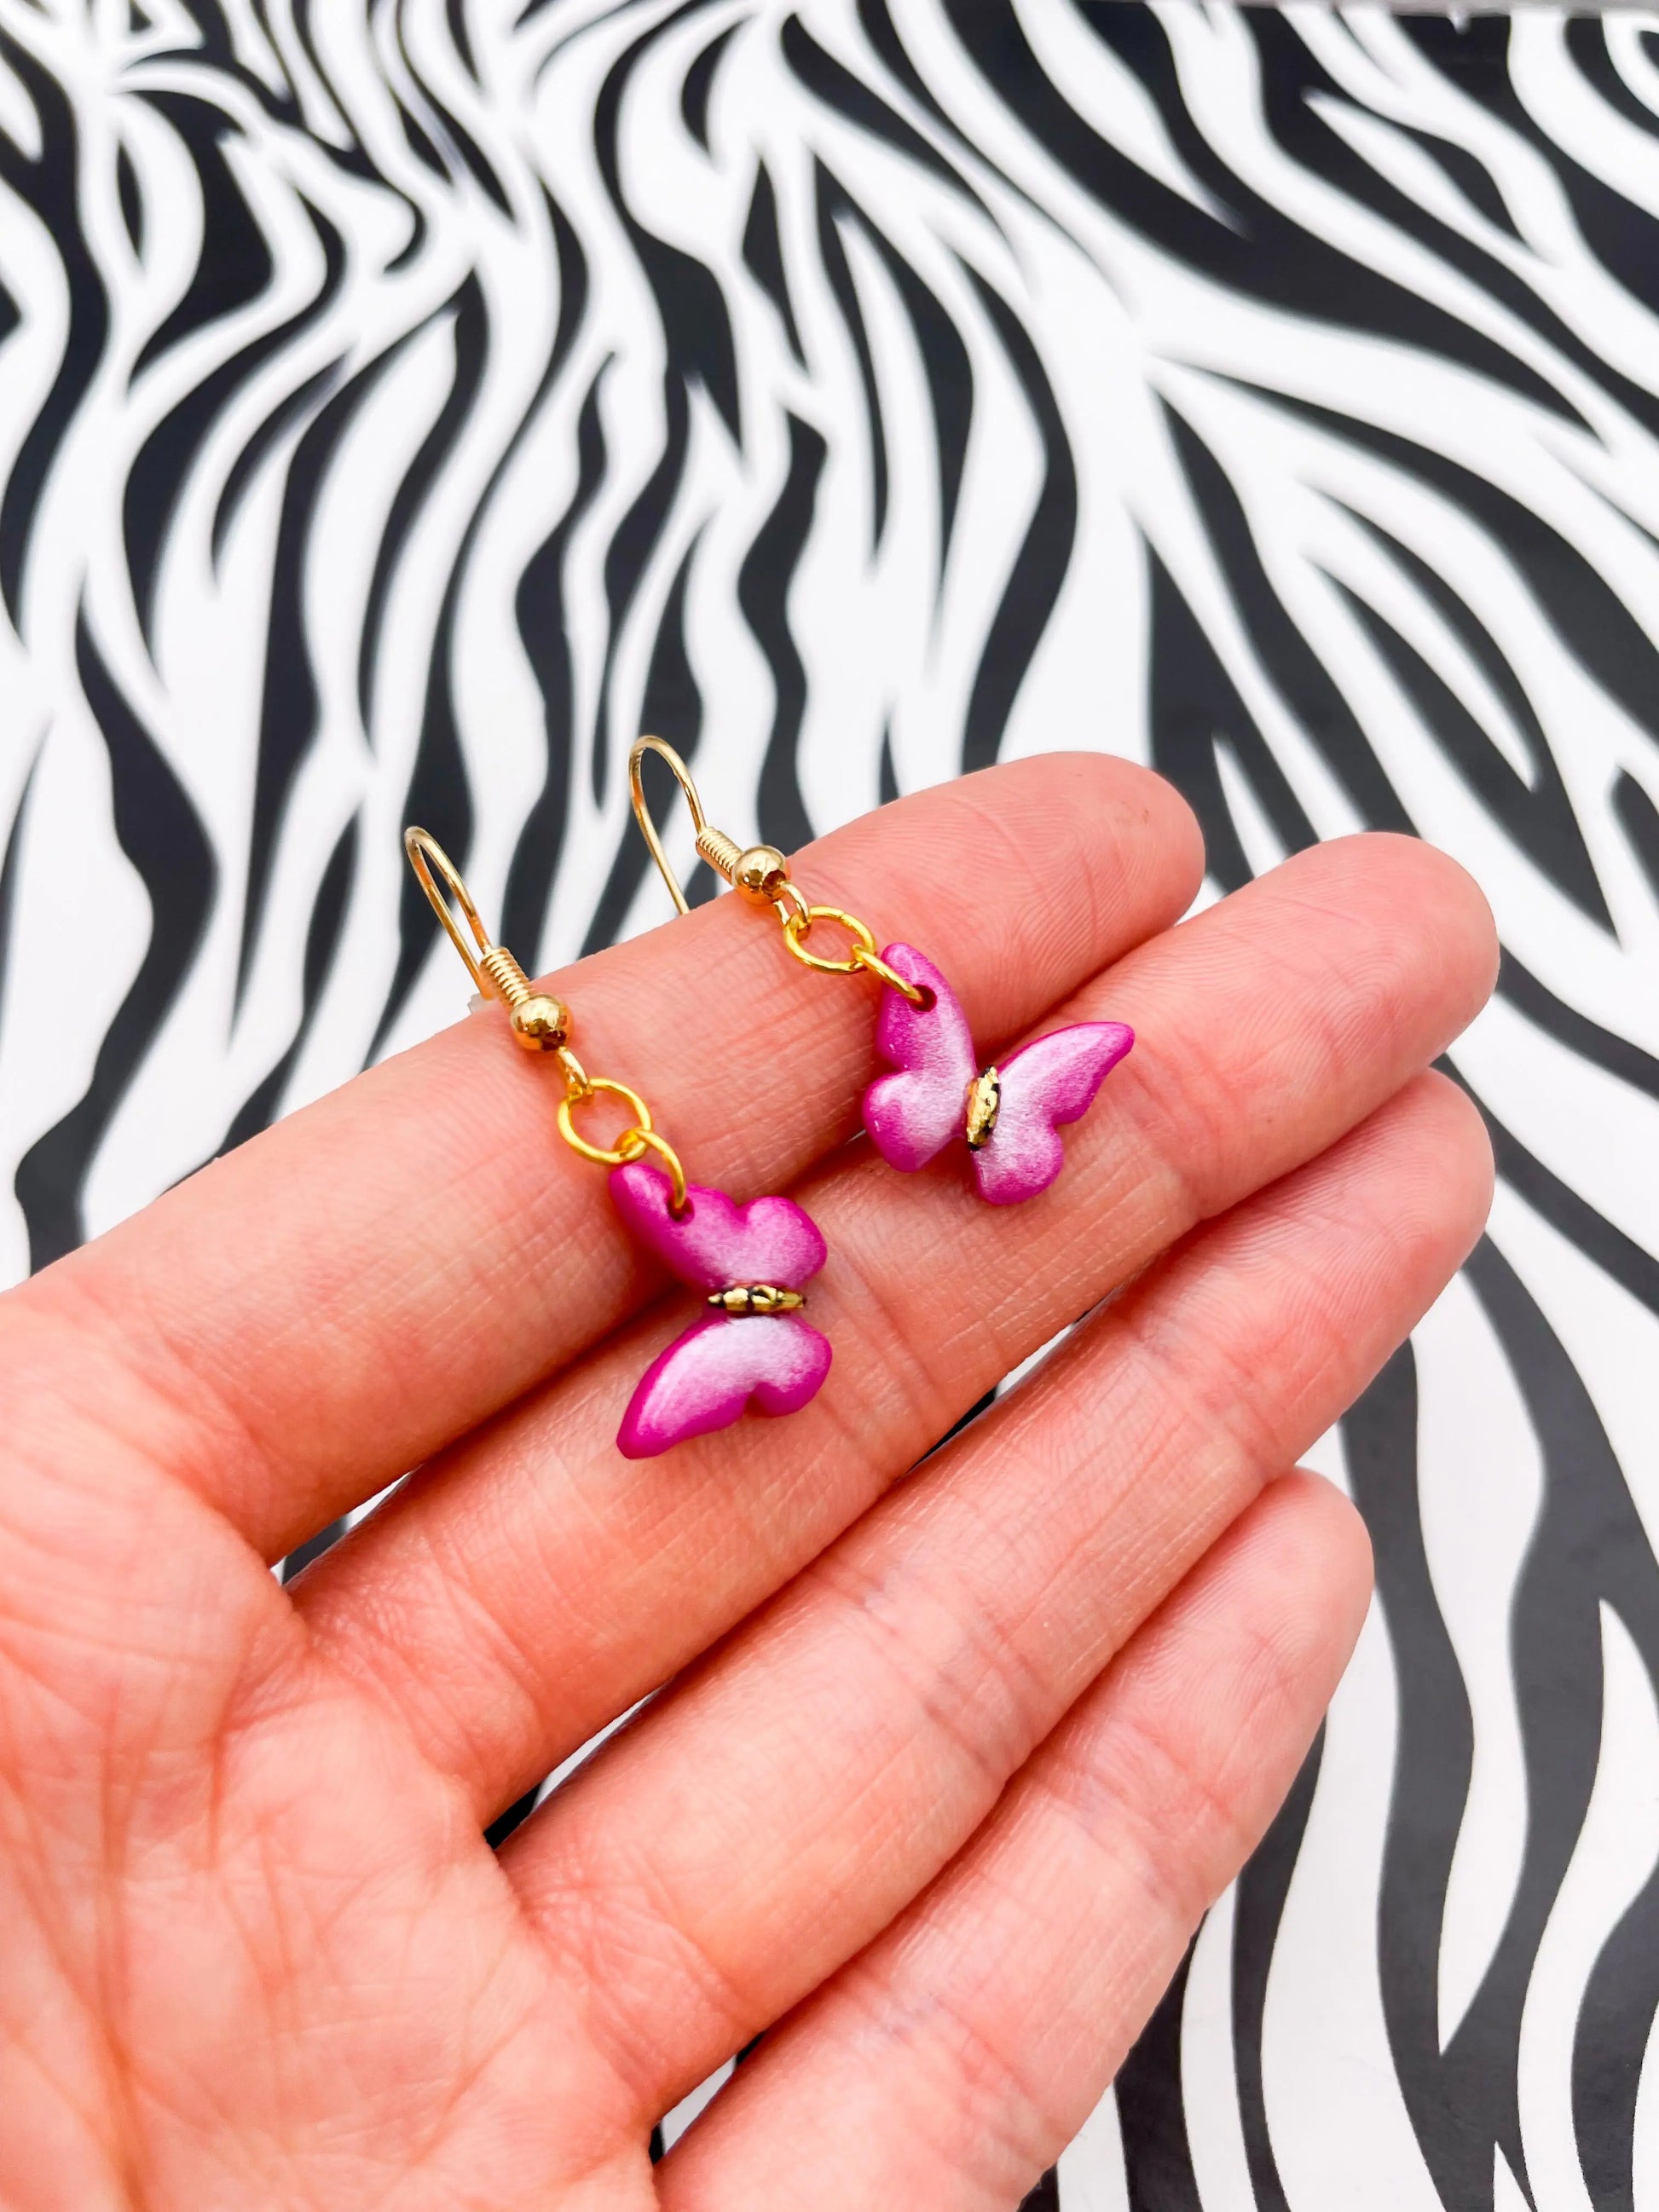 Mini Metallic Hot Pink Shimmery Butterfly Stud Earrings from Sapphire Frills